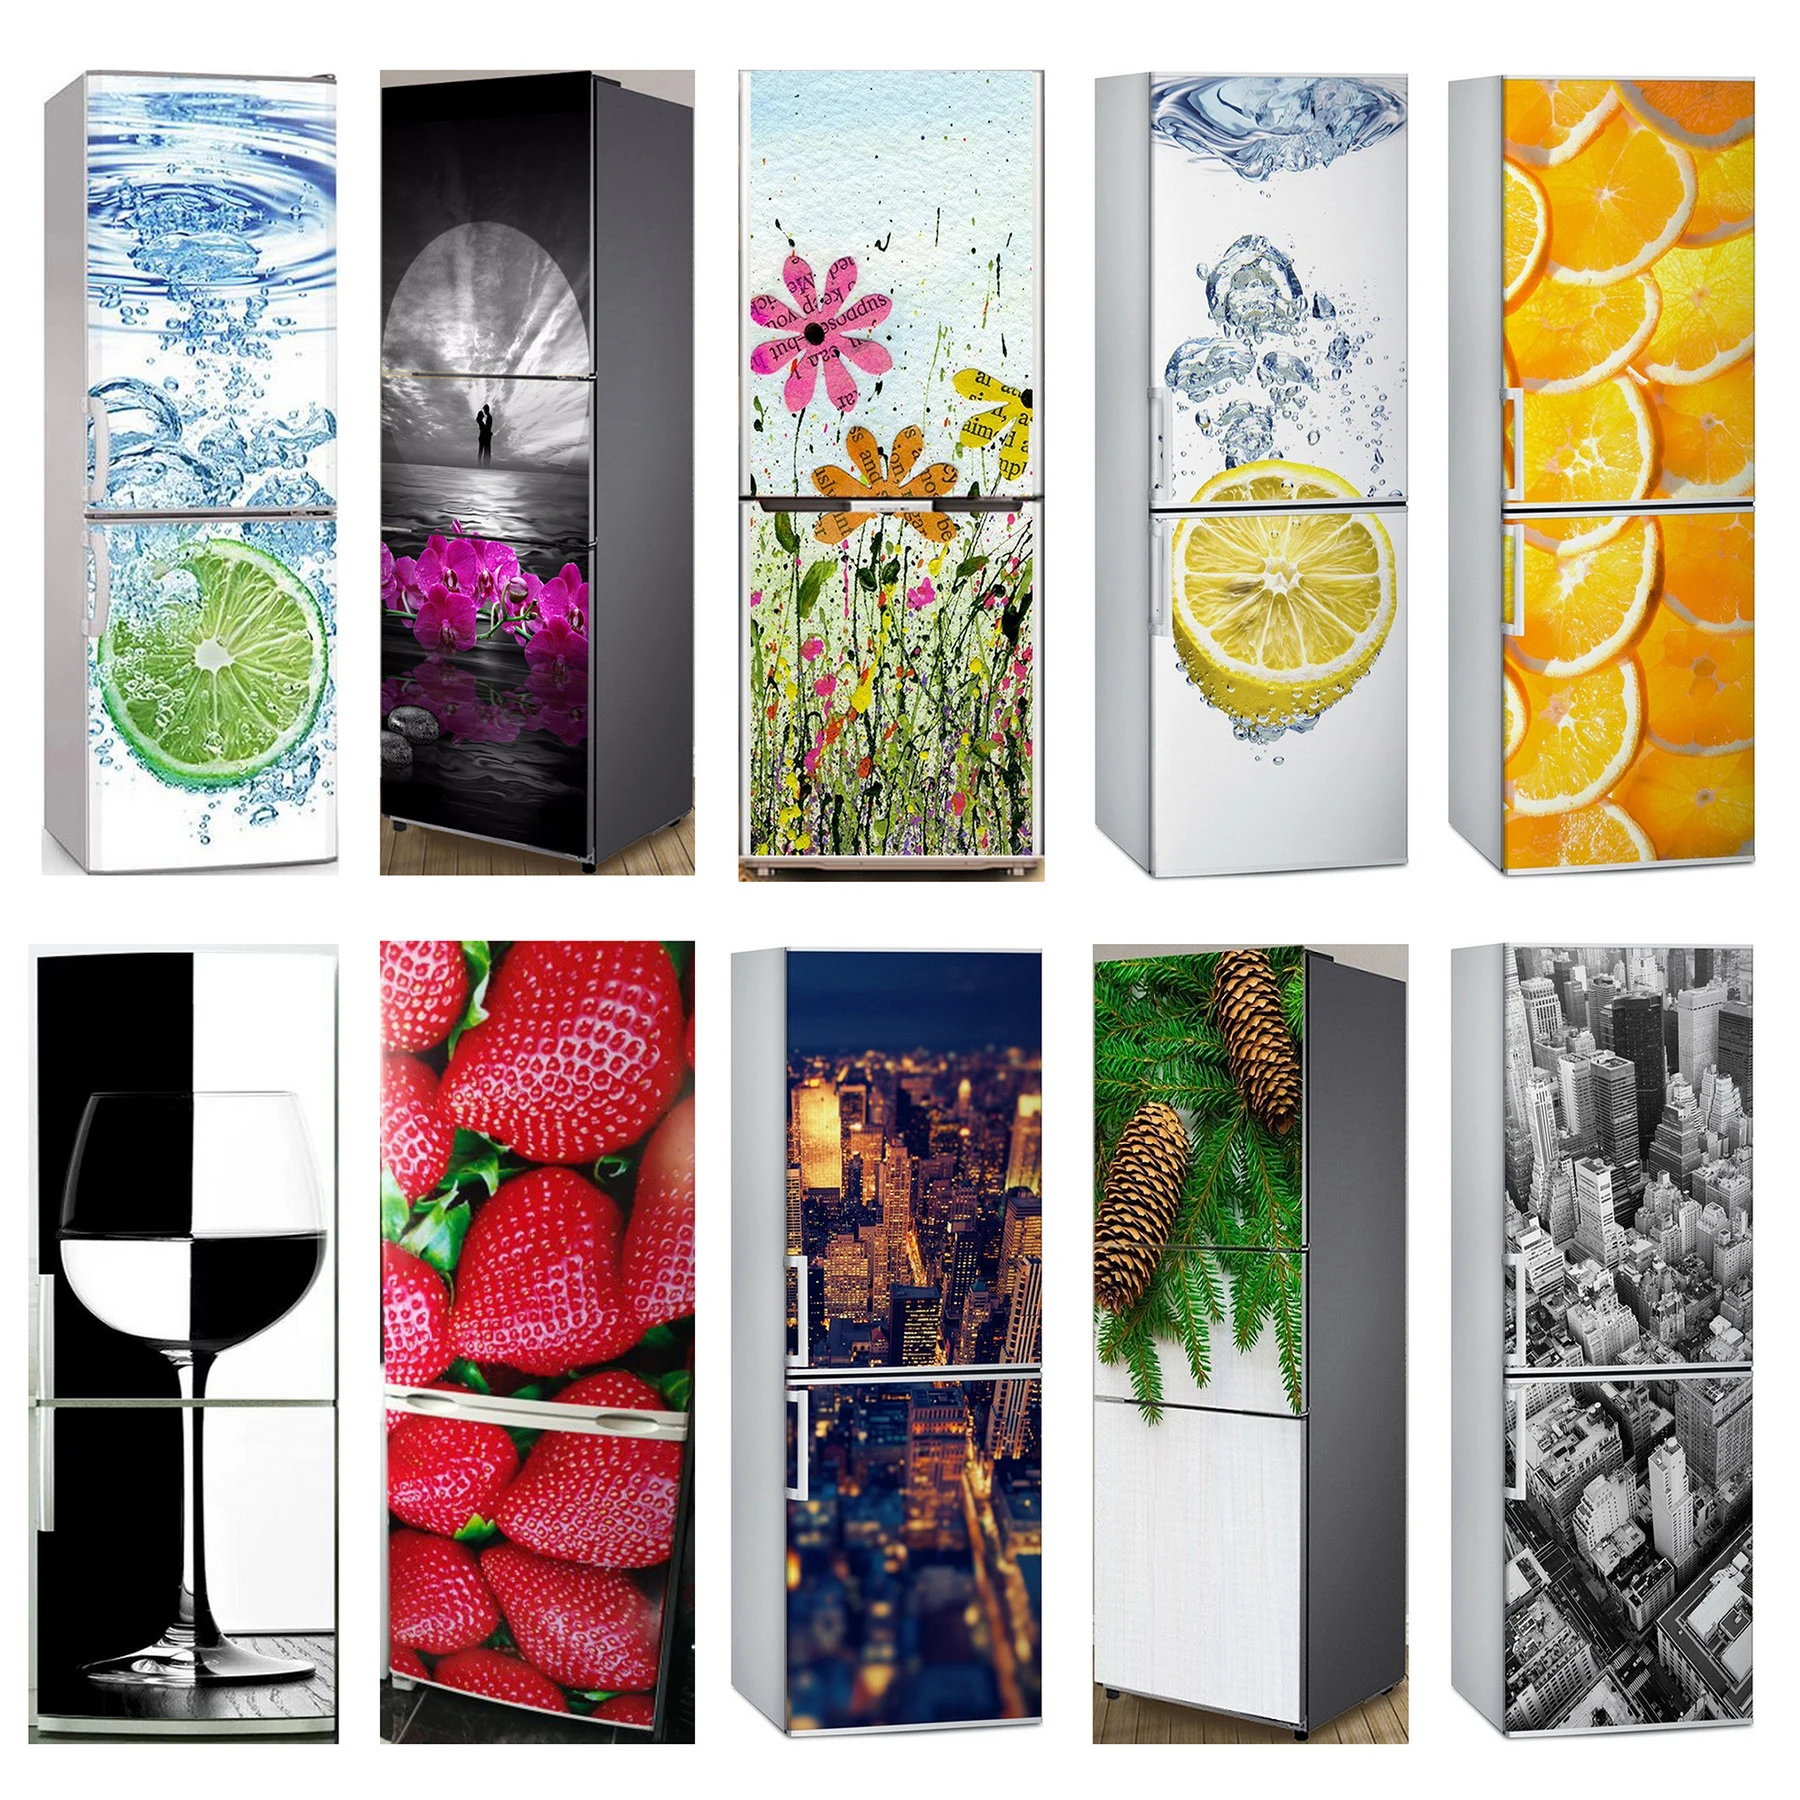 3D Refrigerator Cover Wallpaper self-Adhesive Dishwasher Refrigerator Frozen Paste Broken Brick Picture Paper Children Art c3 60x180cm 